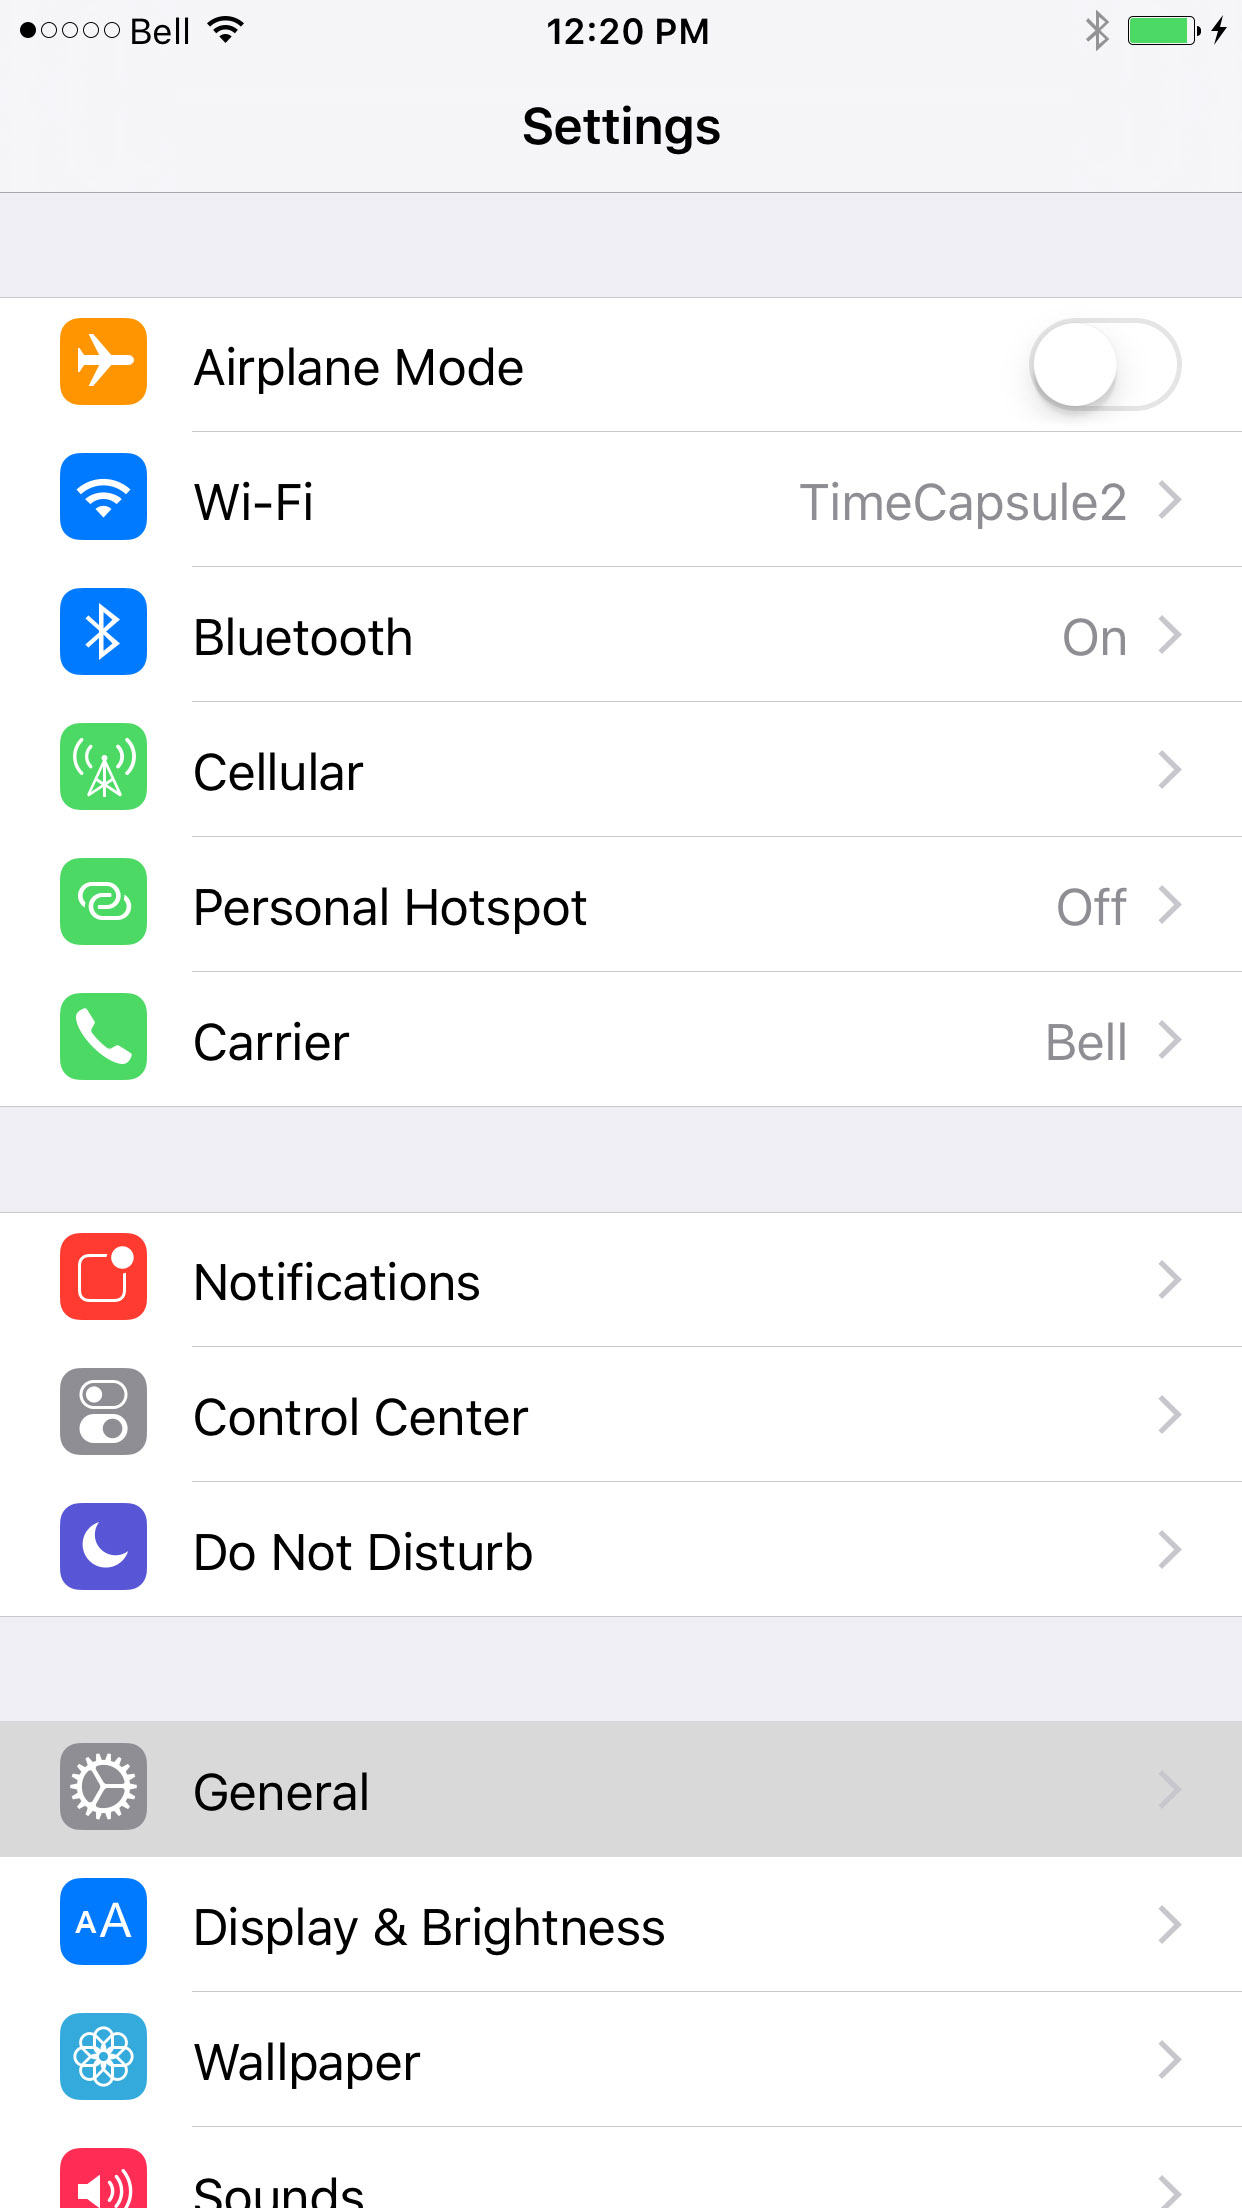 How to Jailbreak Your iPhone on iOS 9.2 - 9.3.3 (Windows)